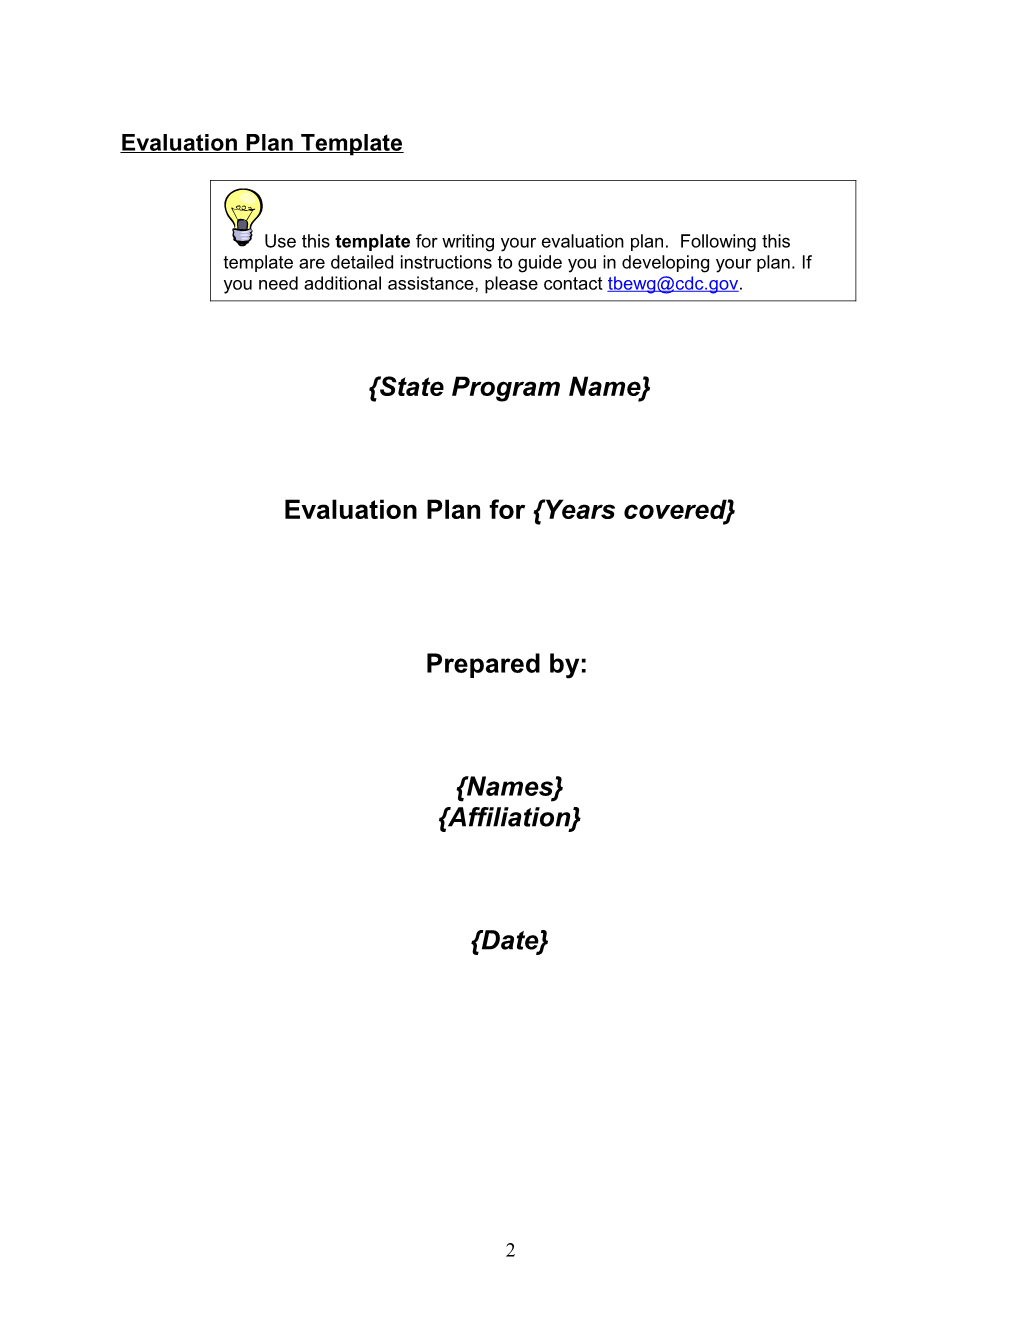 DTBE Program Evaluation Guide Evaluation Plan Template